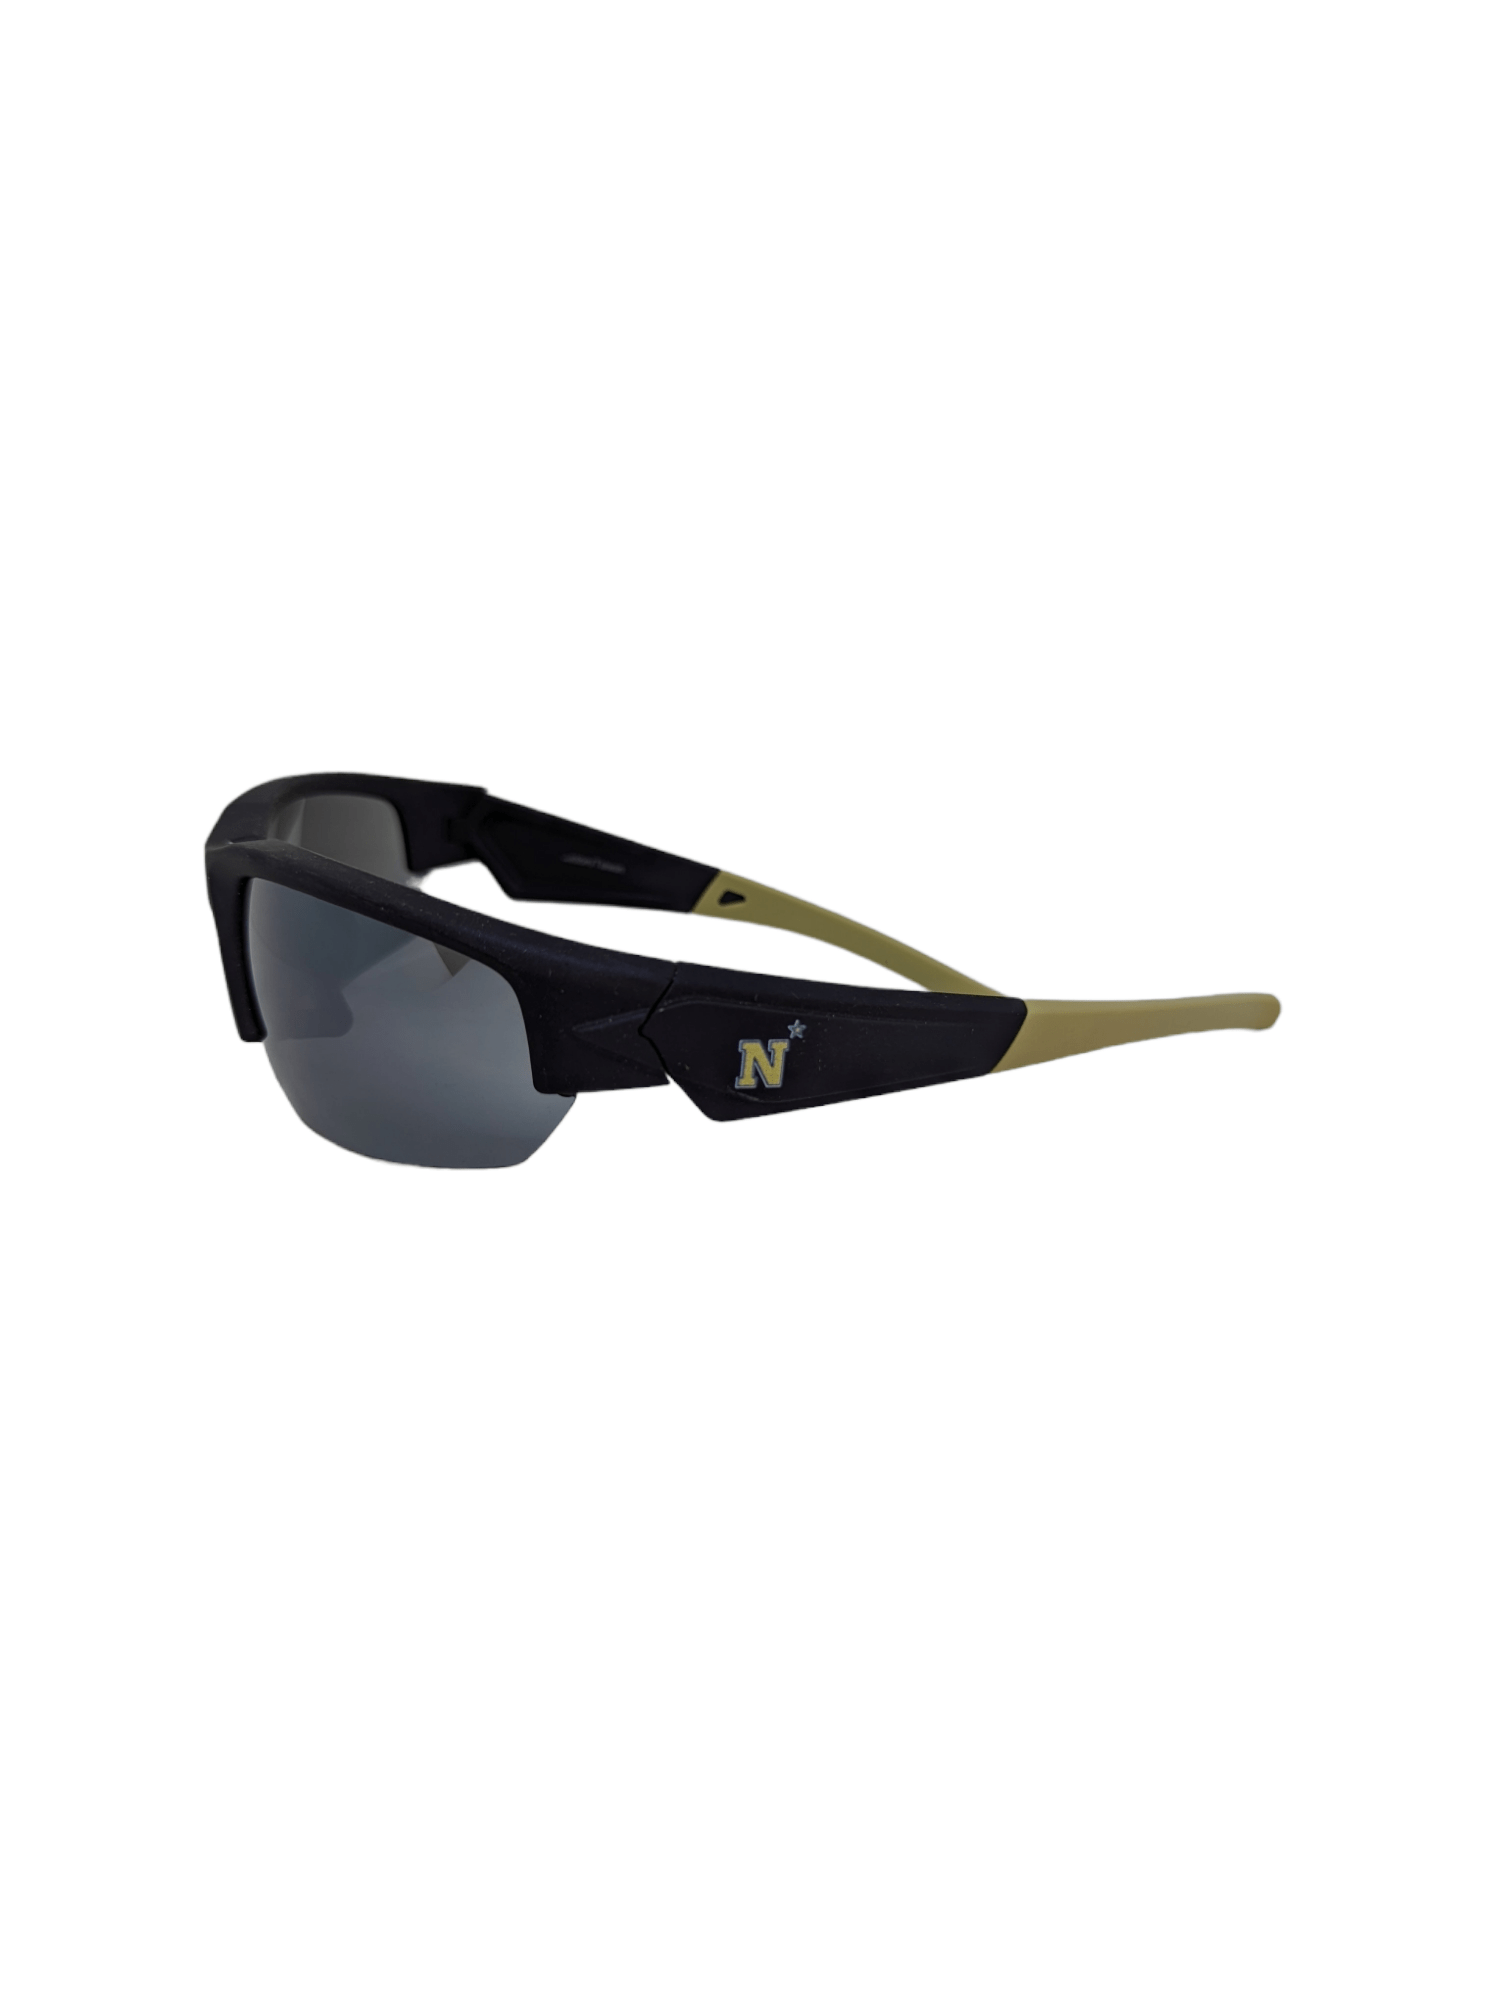 On The Mark Sunglasses Navy Academy Sunglasses